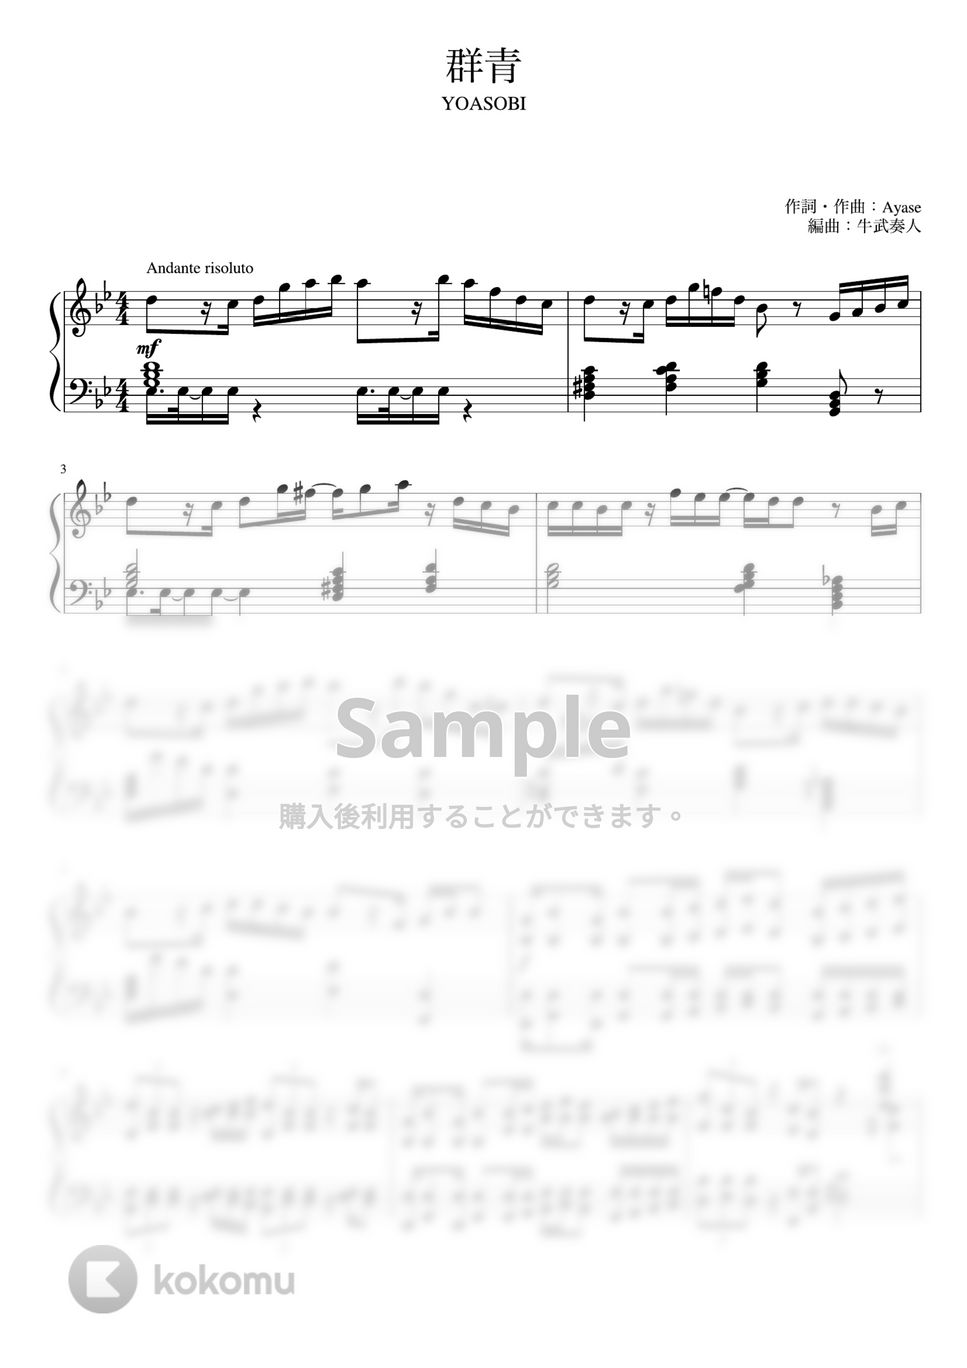 YOASOBI - 群青 (中級ピアノソロ) by 牛武奏人